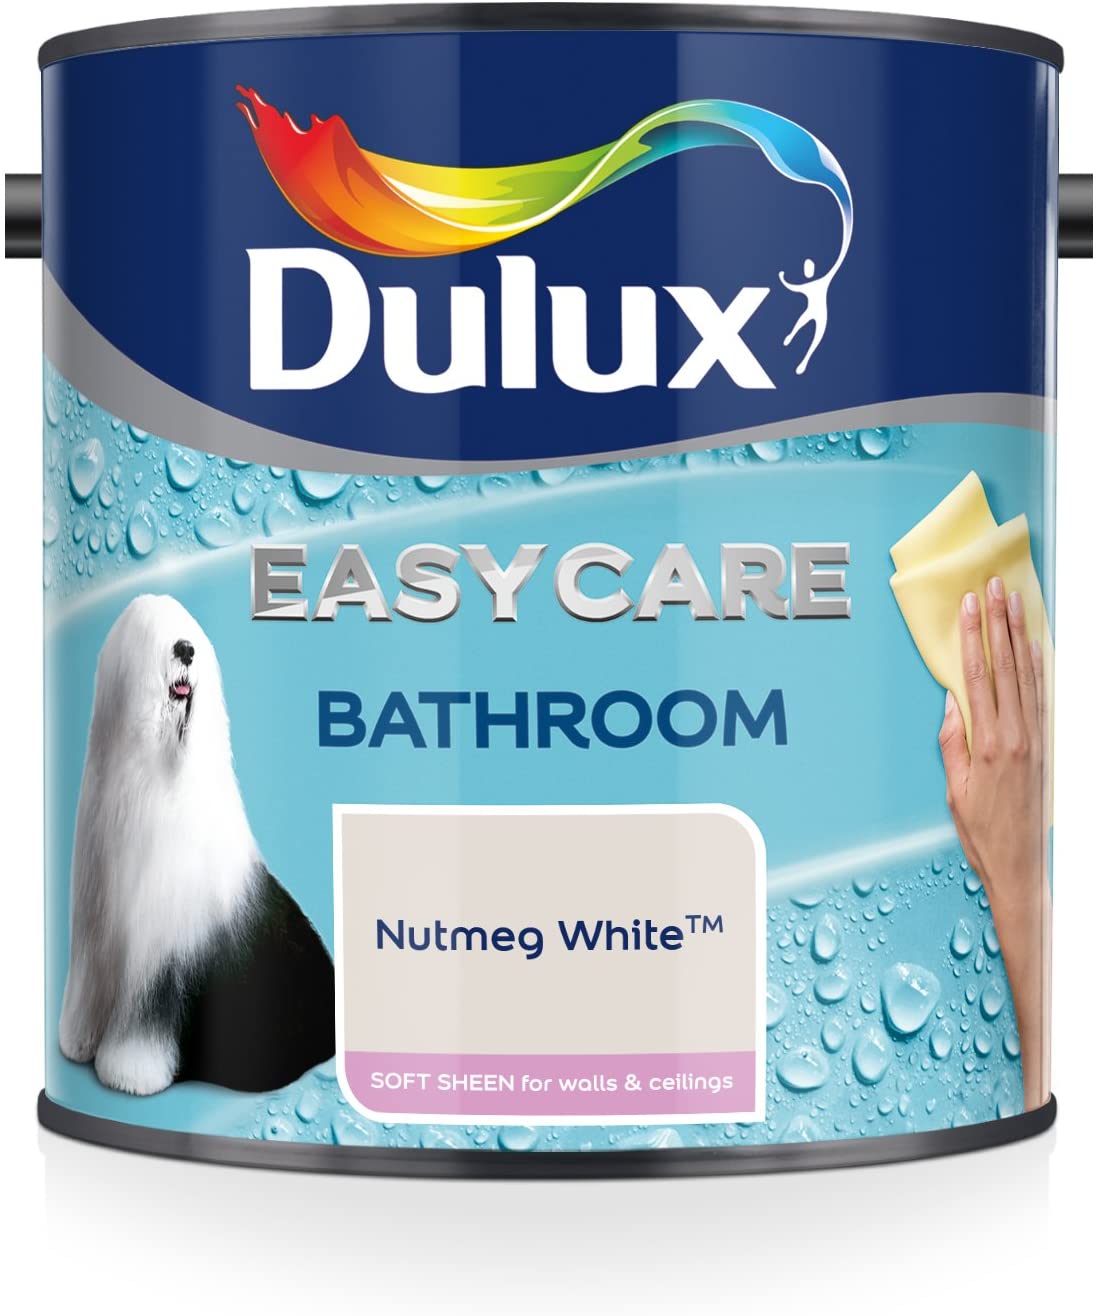 Dulux-Easycare-Bathroom-Soft-Sheen-Emulsion-Paint-For-Walls-And-Ceilings-Nutmeg-White-2.5L